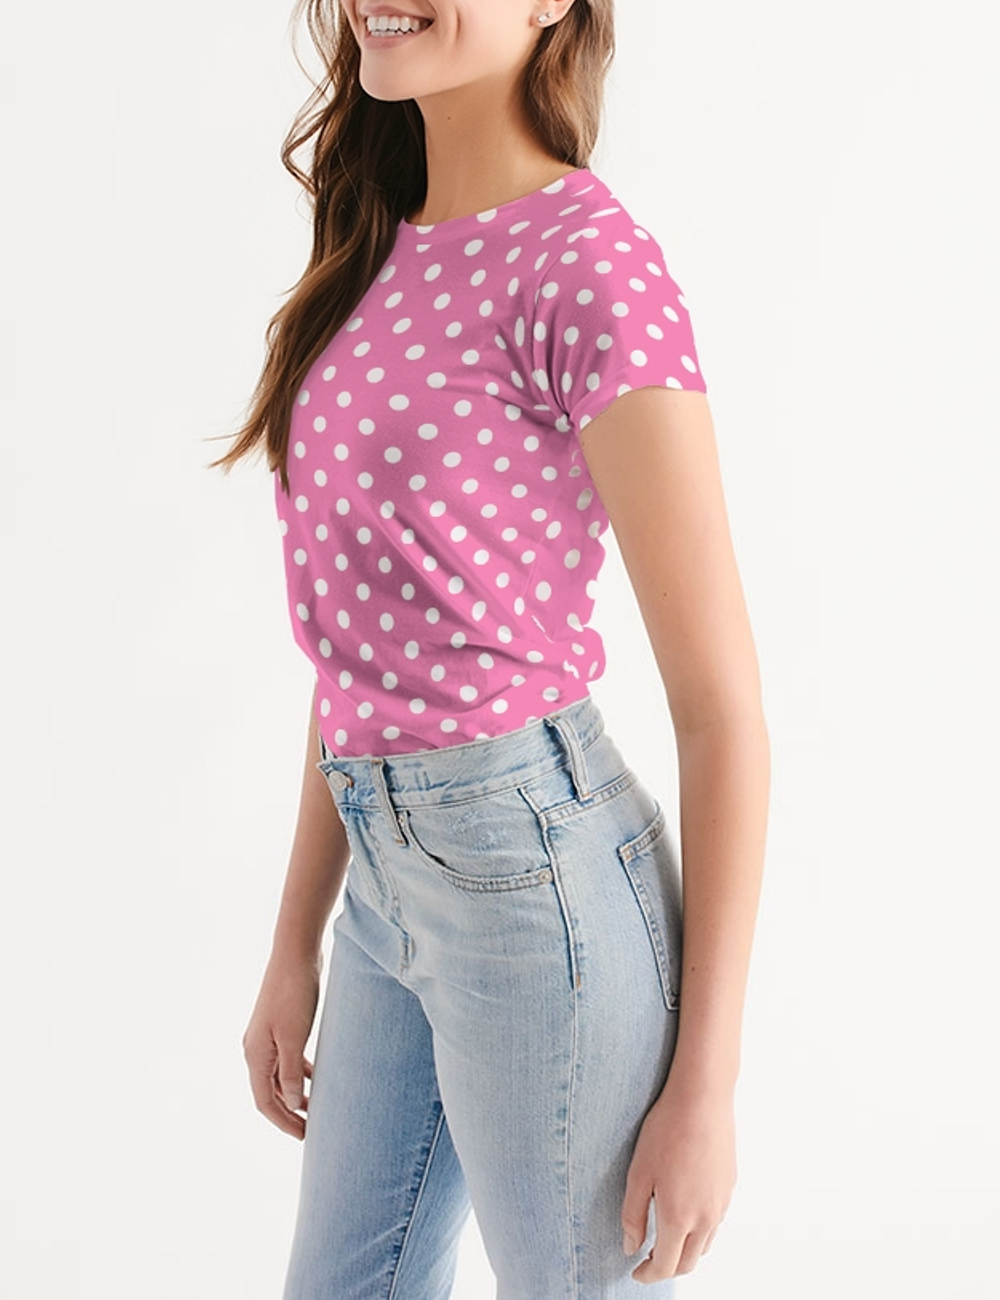 Passion Pink Polka Dot Women's T-Shirt OniTakai